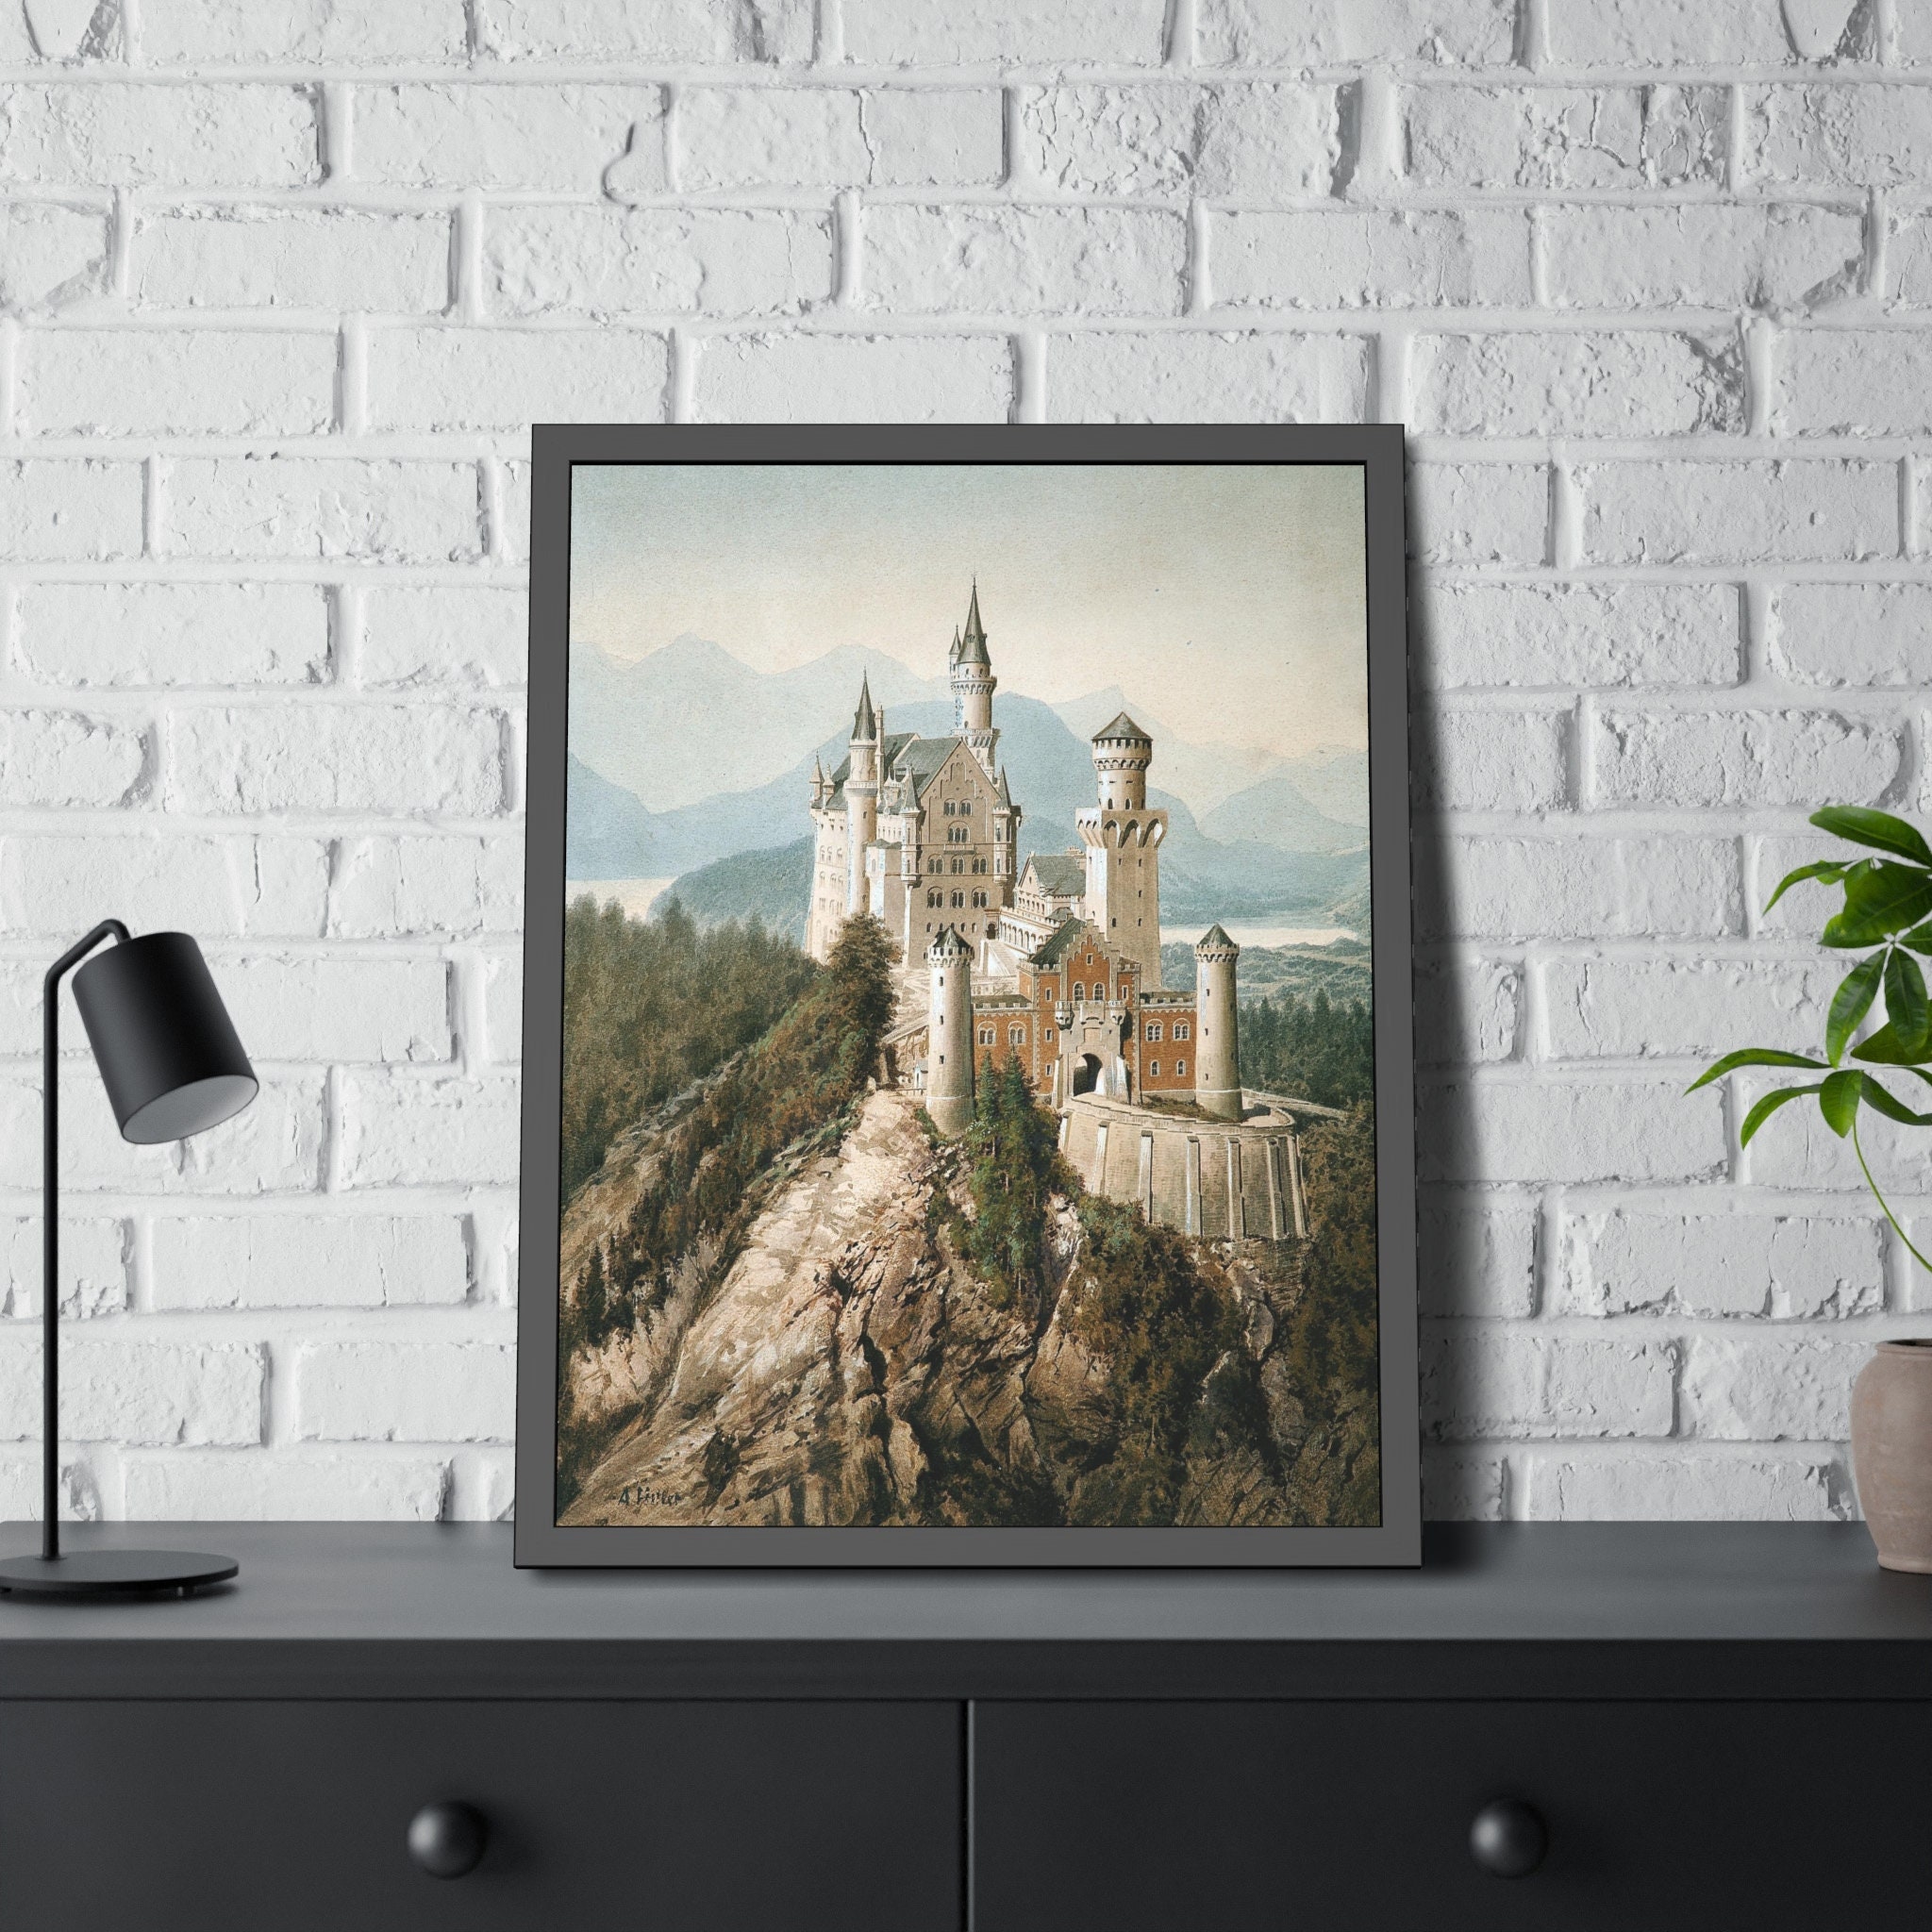 Fairy Tale Castle Art Print Neuschwanstein Oil Painting Germany European  Landscape Handmade 8x10 or 8.5x11 Artwork With 11x14 Mat 